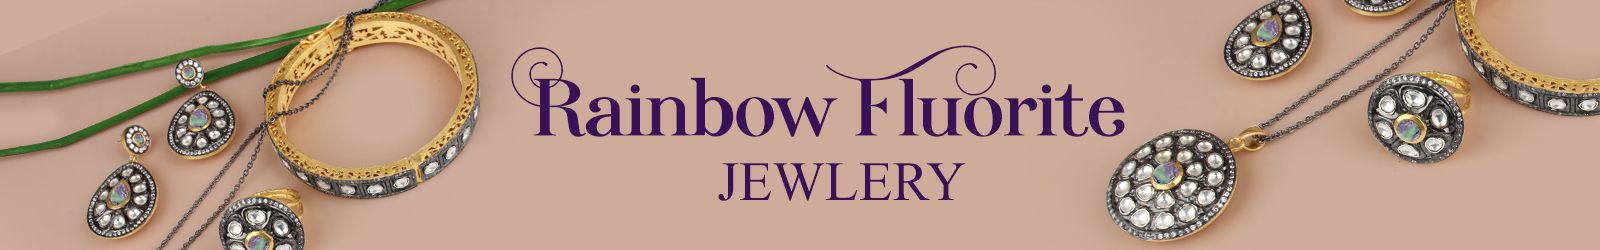 Silver Rainbow Fluorite Jewelry Wholesale Supplier